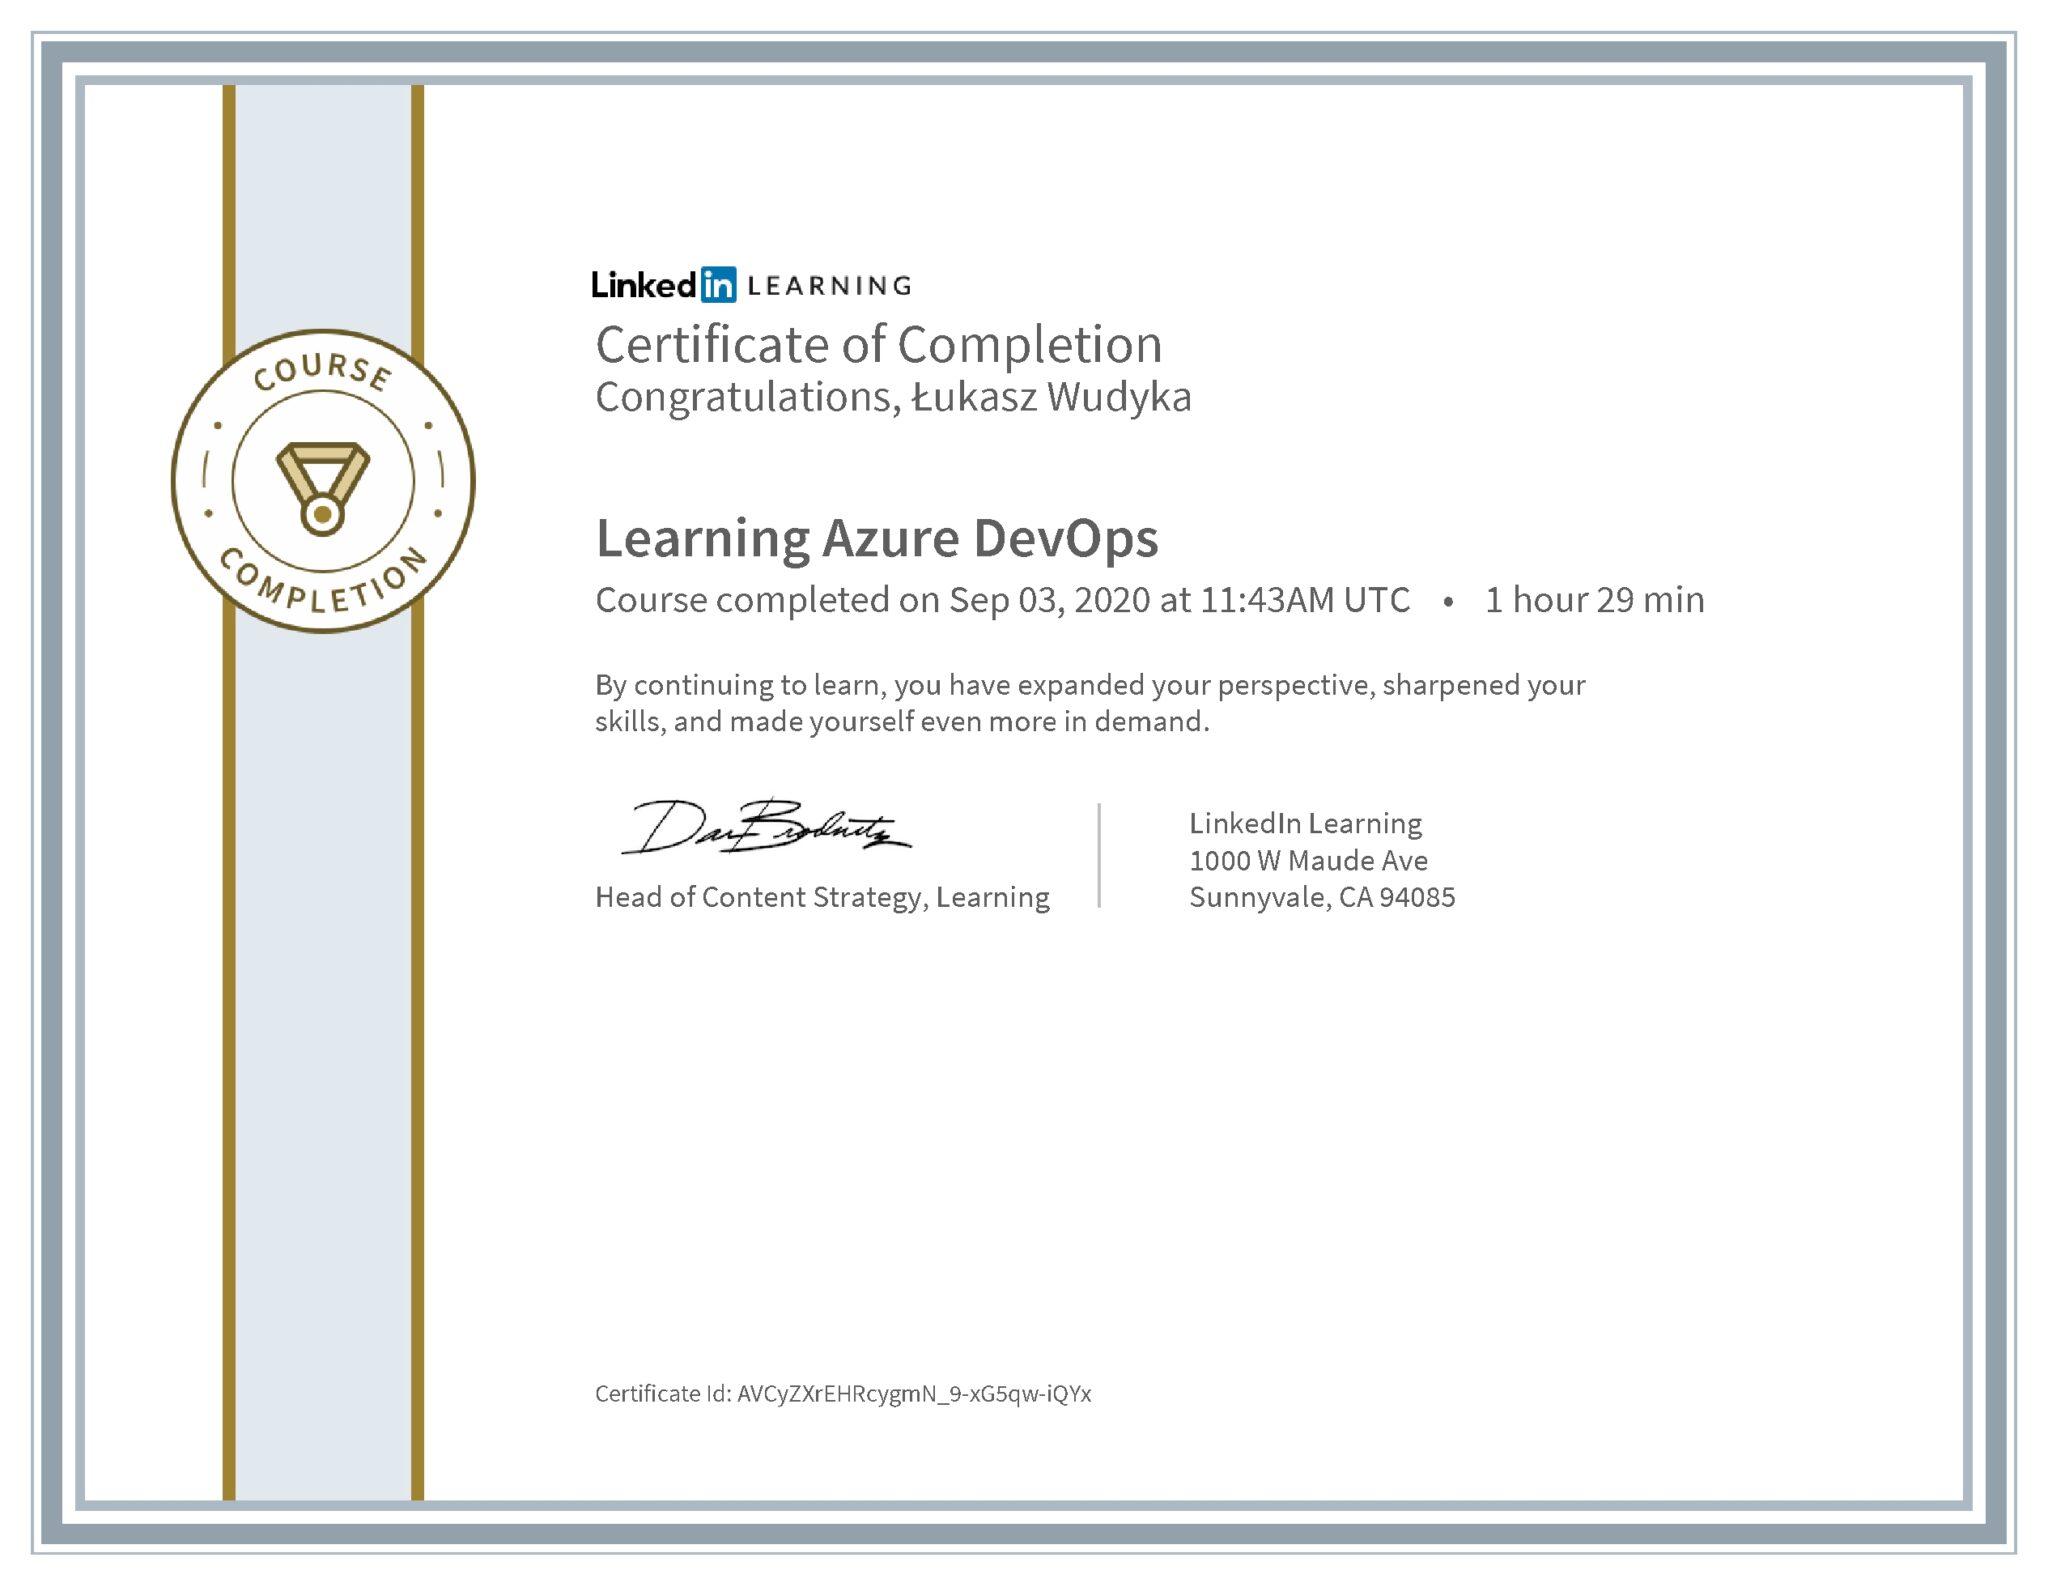 Łukasz Wudyka certyfikat LinkedIn Learning Azure DevOps